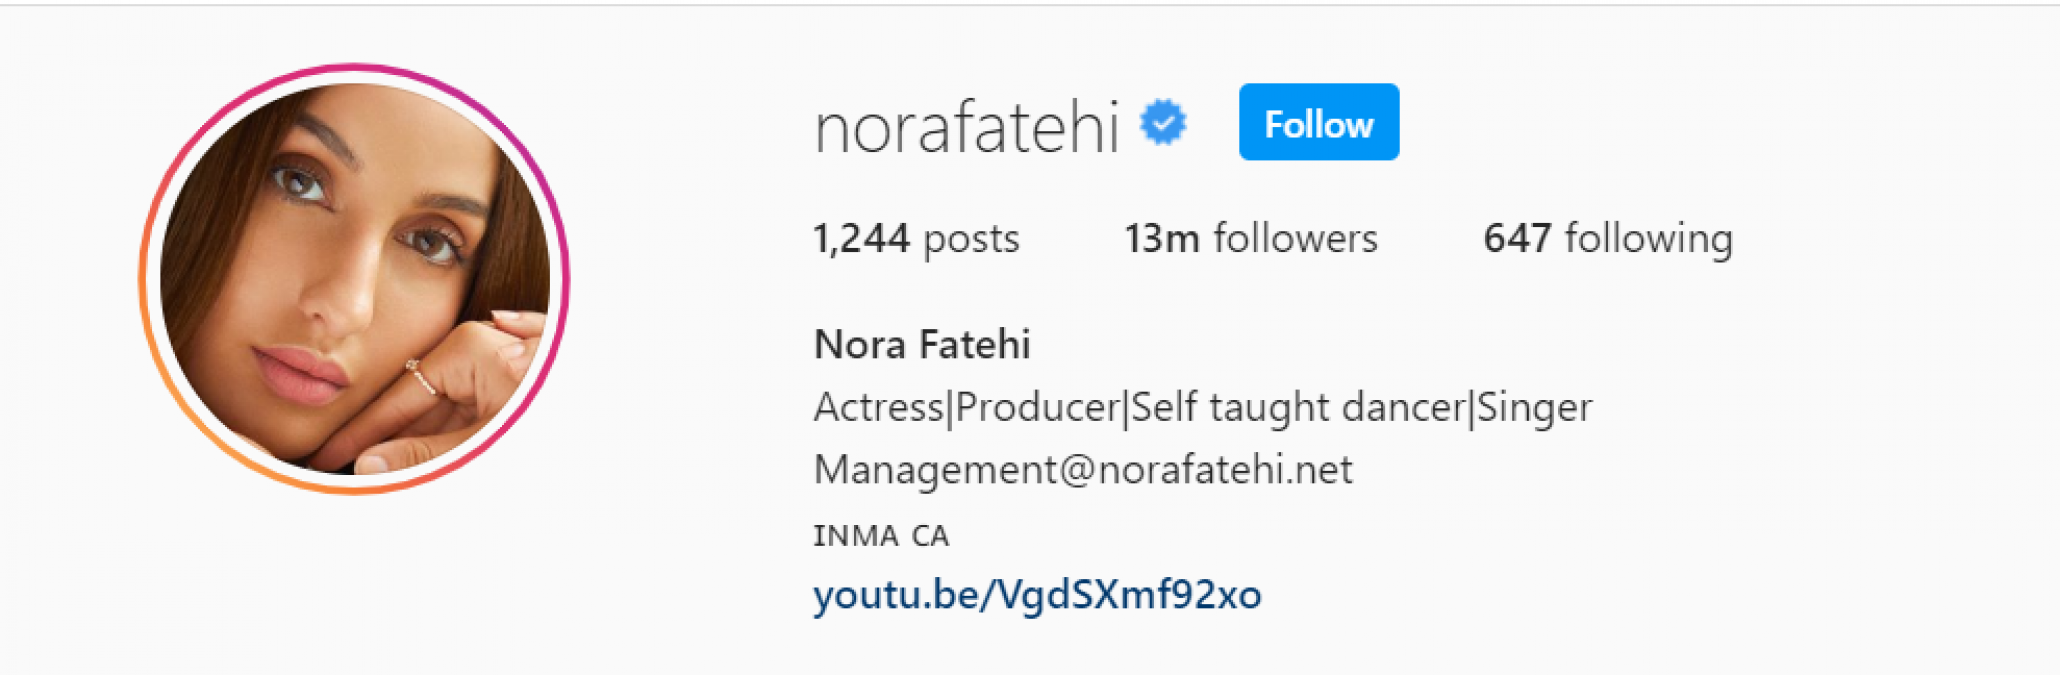 Nora Fatehi's 13 million followers on Instagram